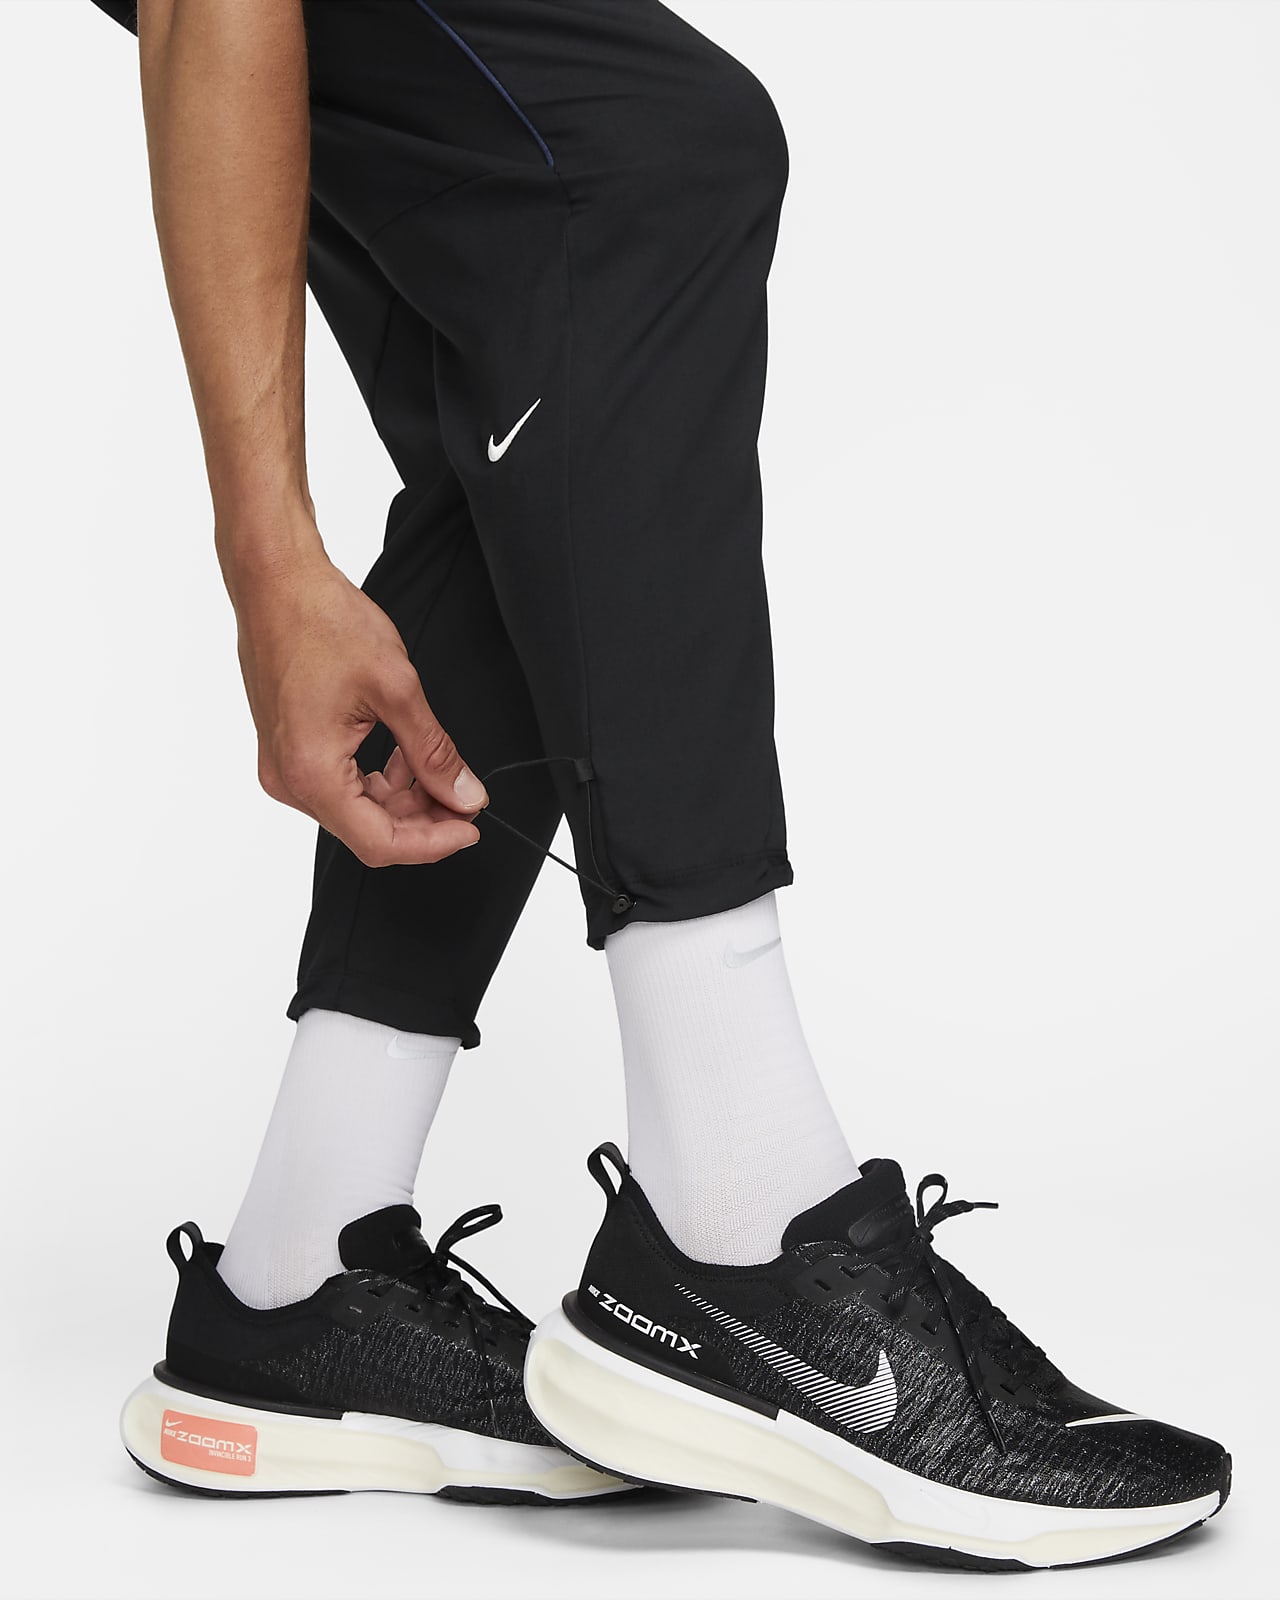 Men's Nike Tracksuit Jogging Bottoms Joggers Slim Fit Track Pants - Navy  Blue | eBay